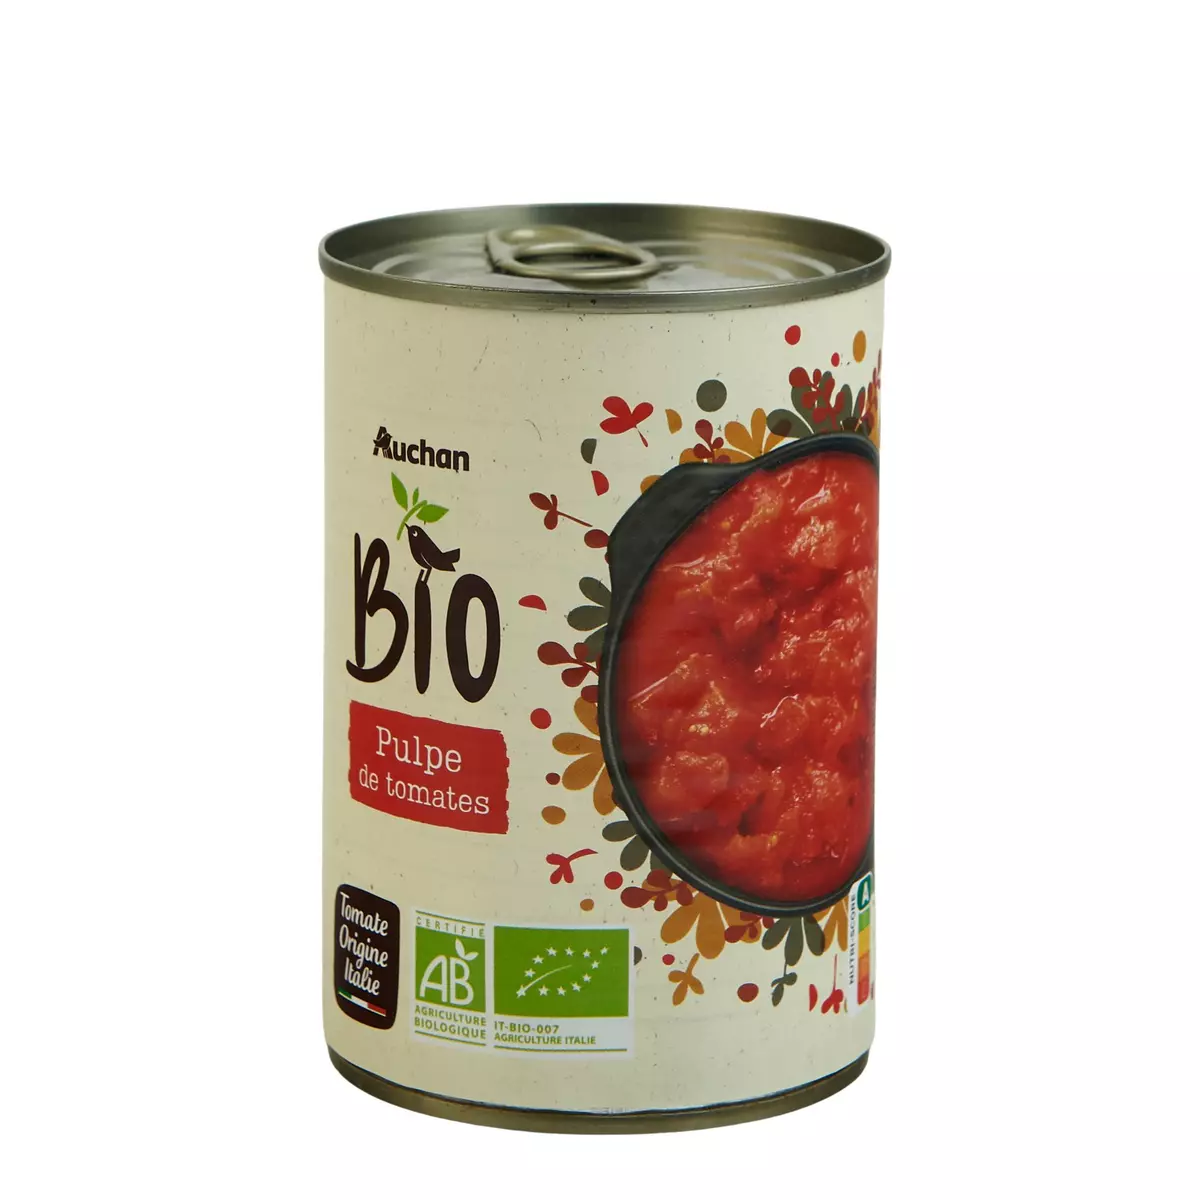 AUCHAN BIO Pulpe de tomates 400g